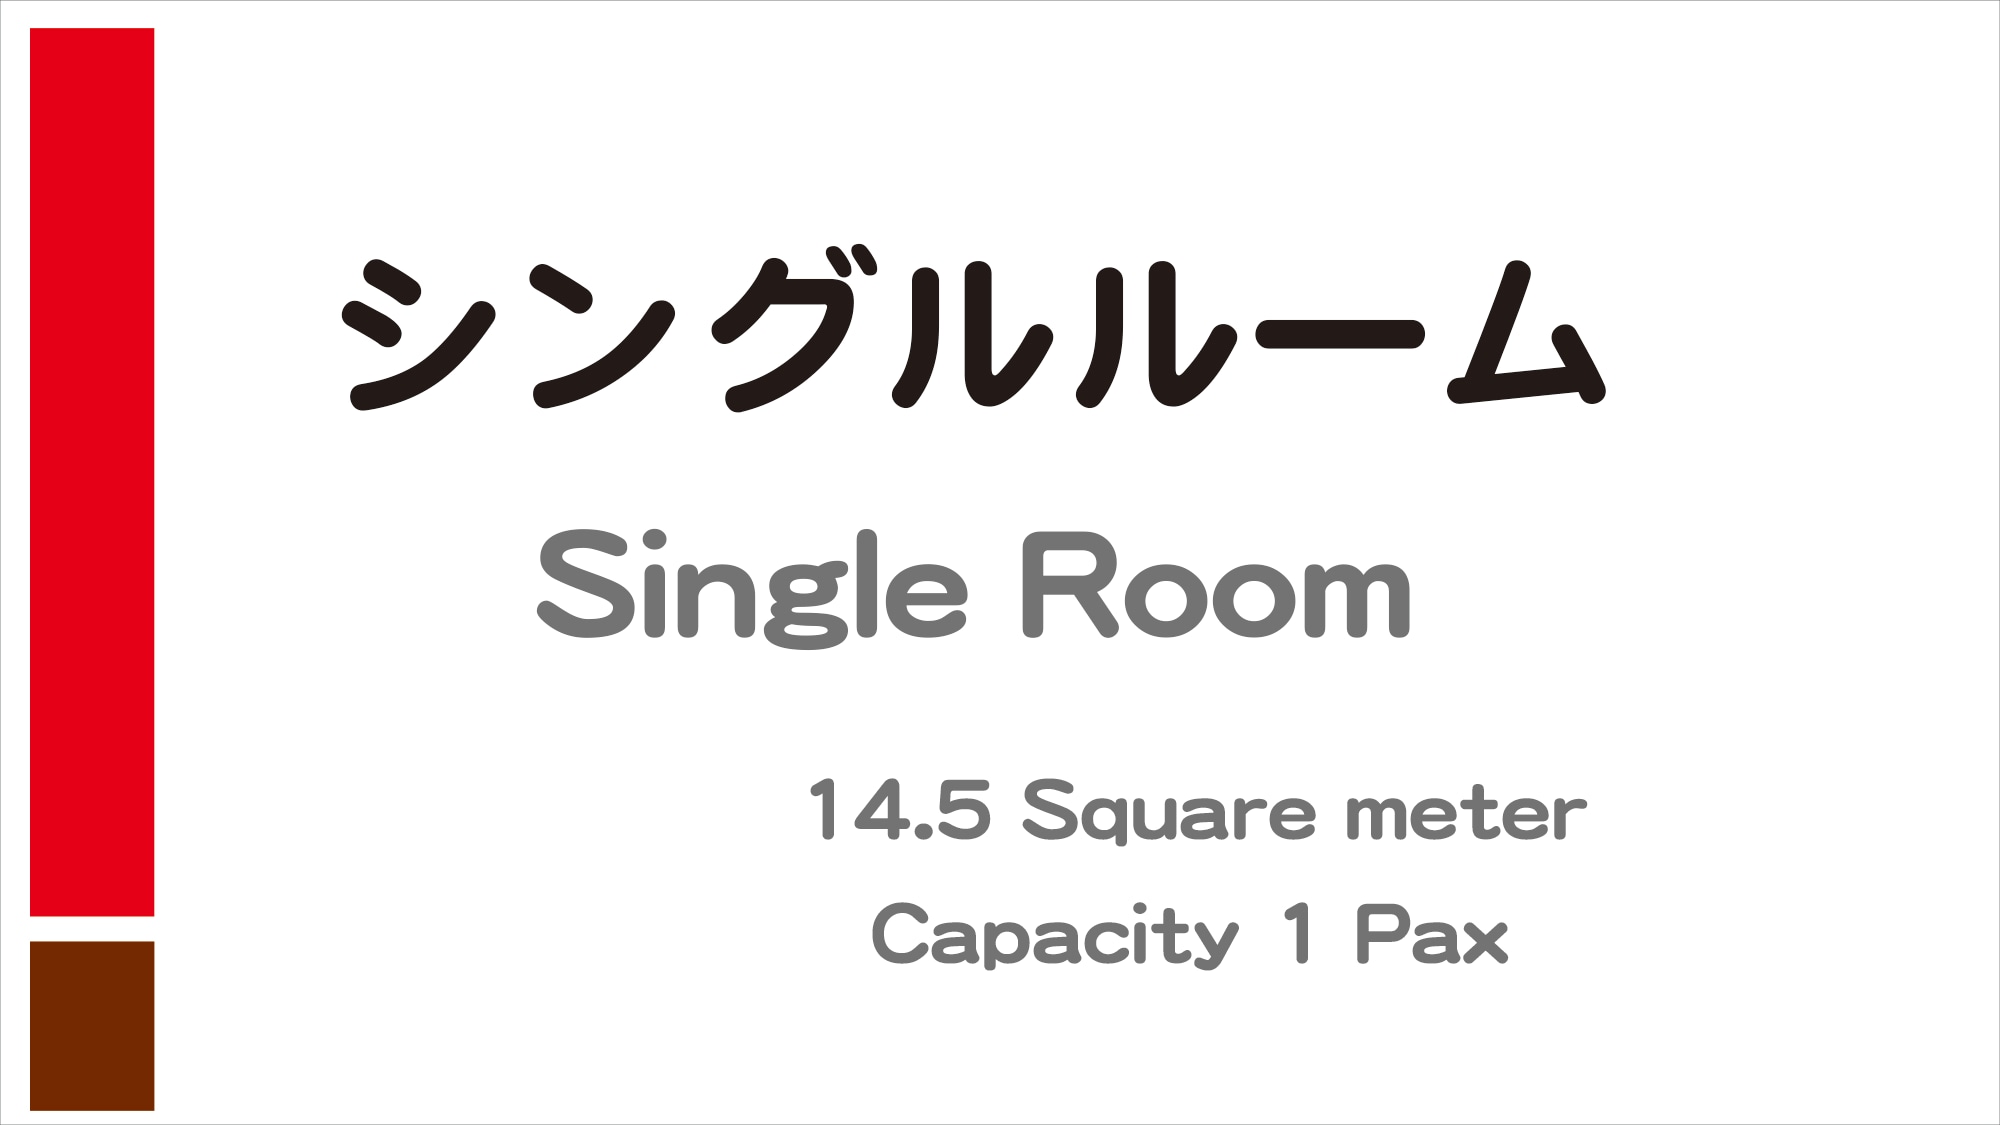 Single room information